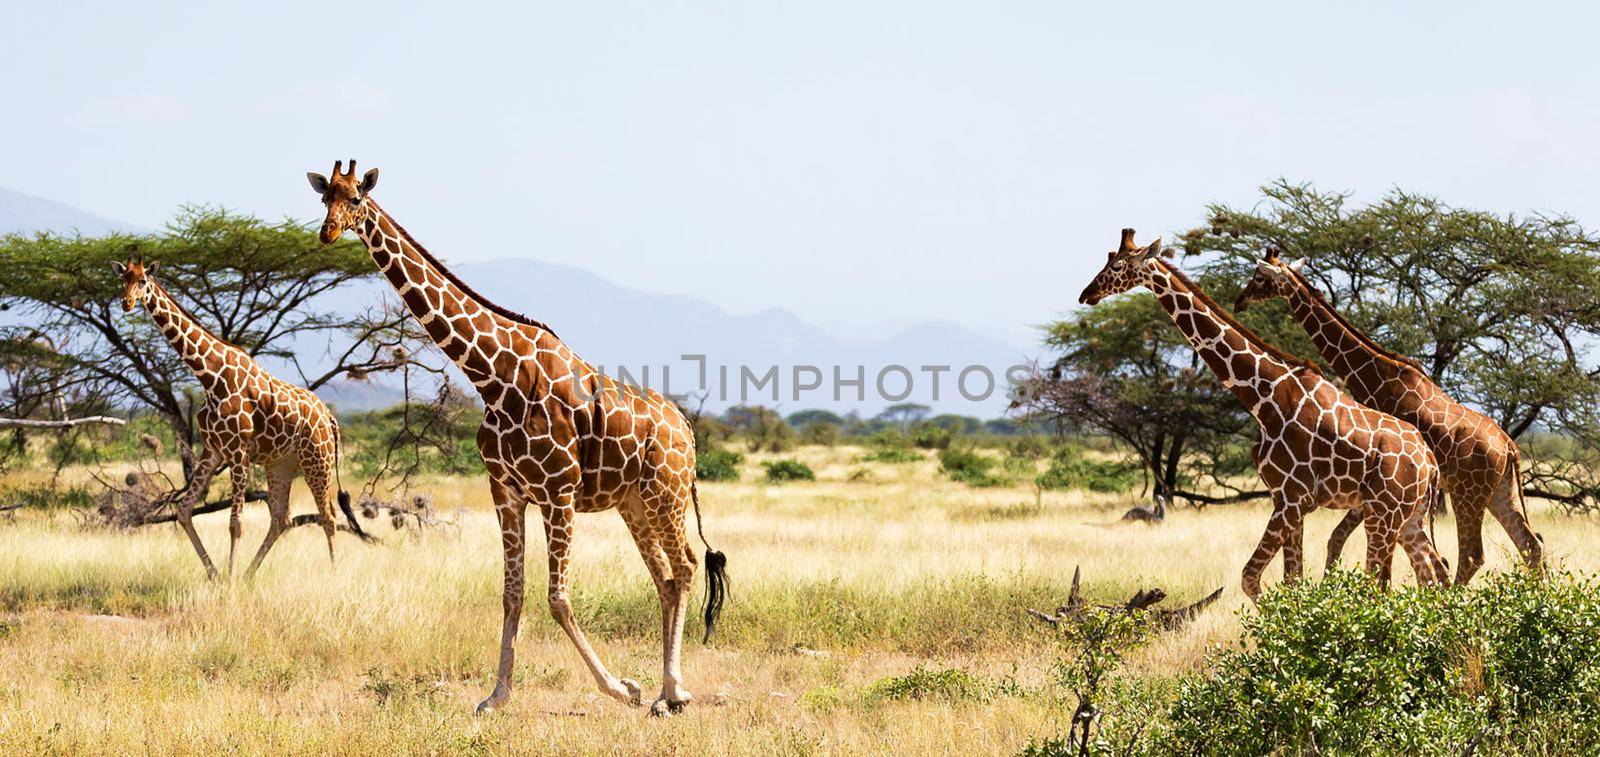 Somalia wildlife  Pictures by TravelSync27